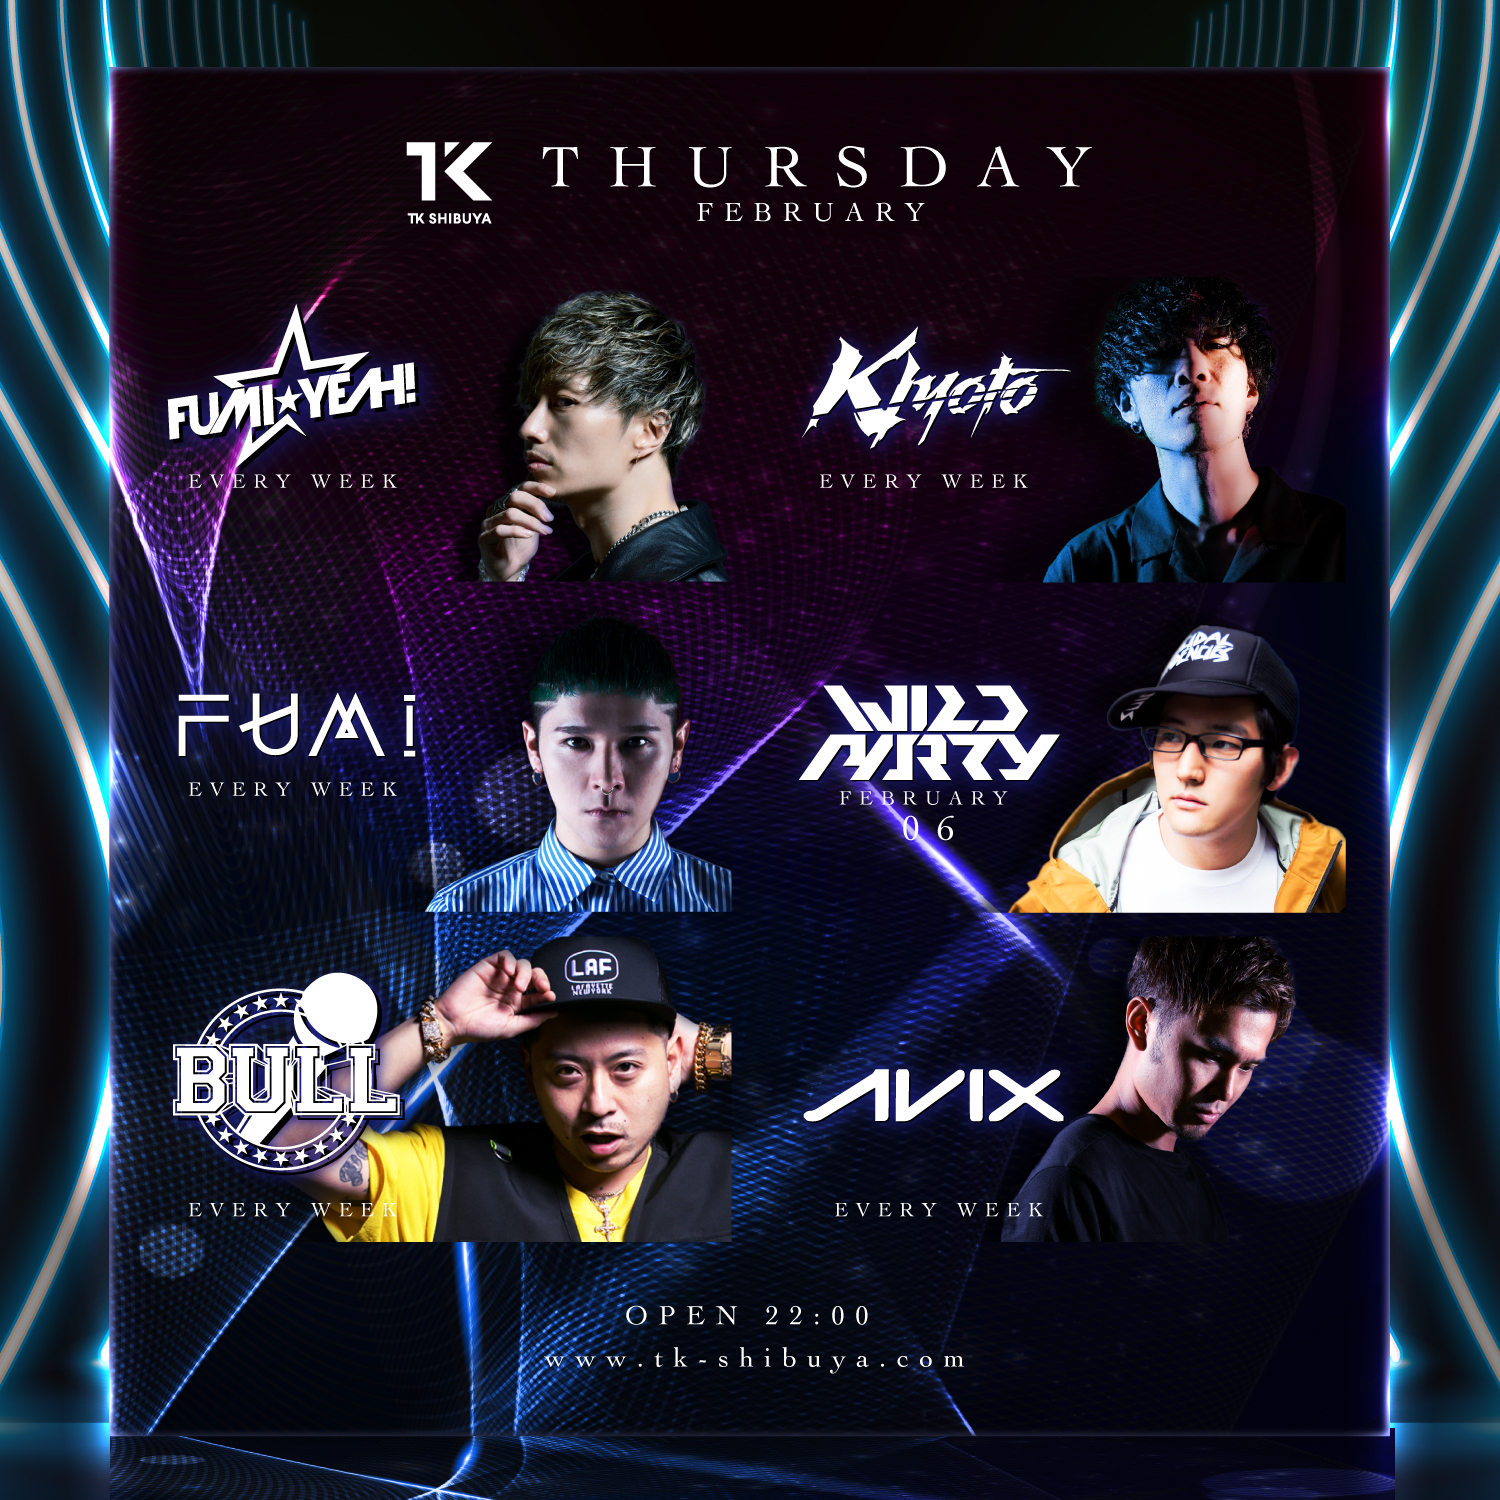 TK Thursday